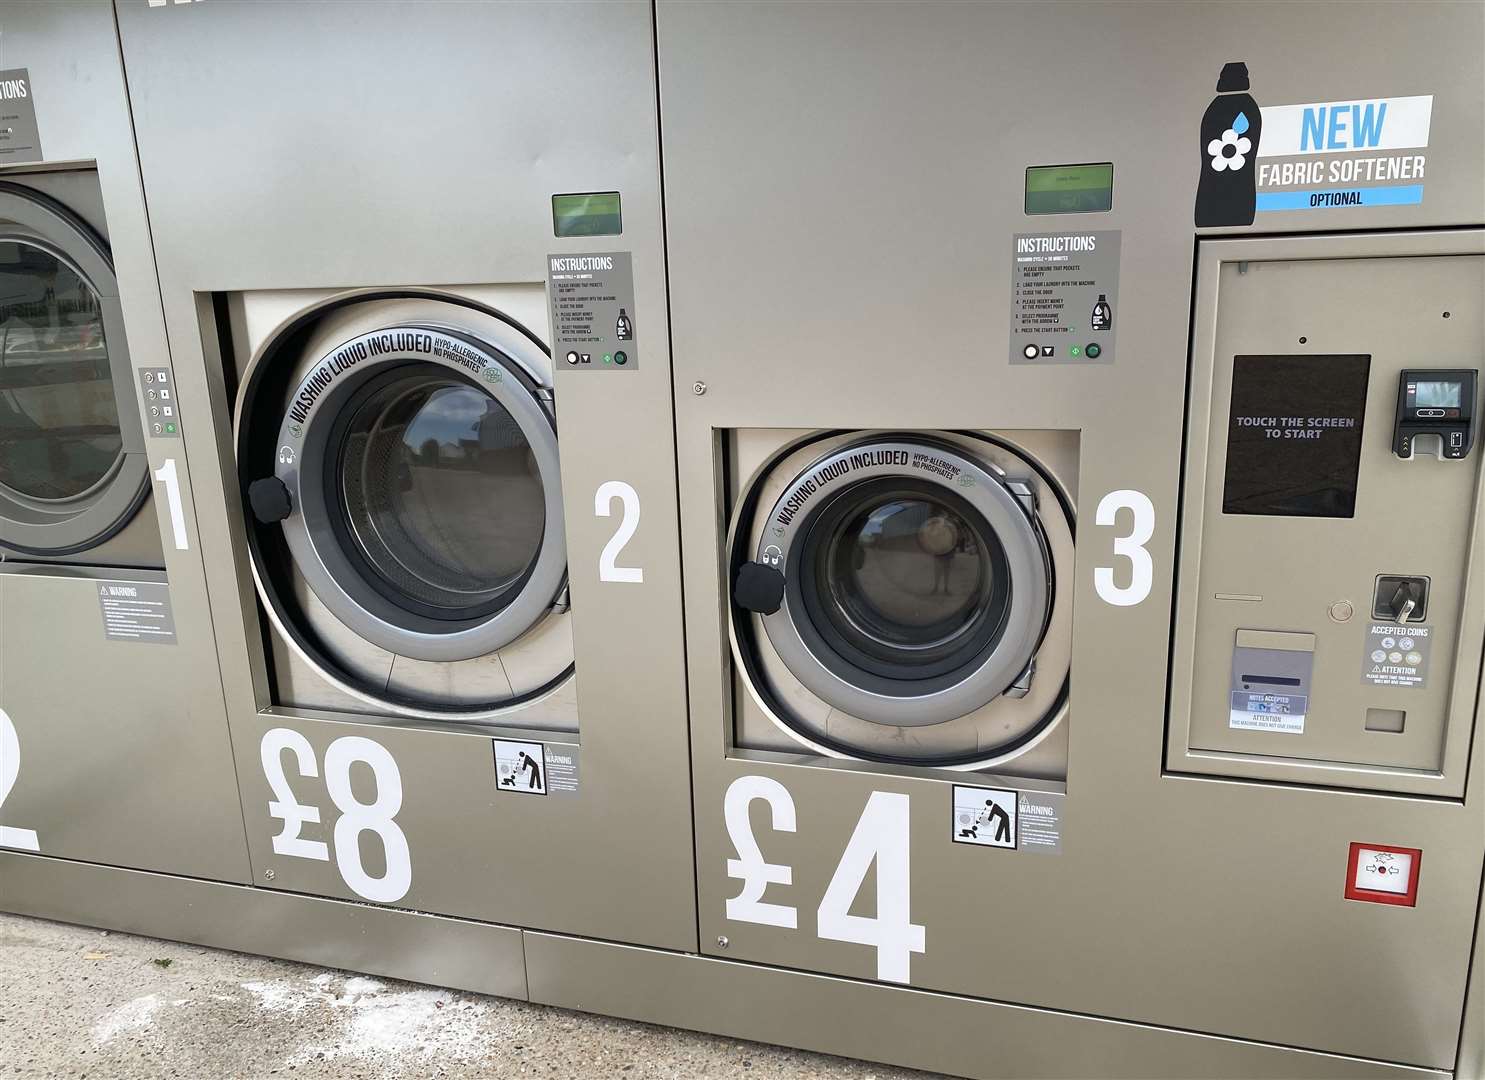 A Revolution Laundry self-service laundrette in Ashford. Picture: Barry Goodwin